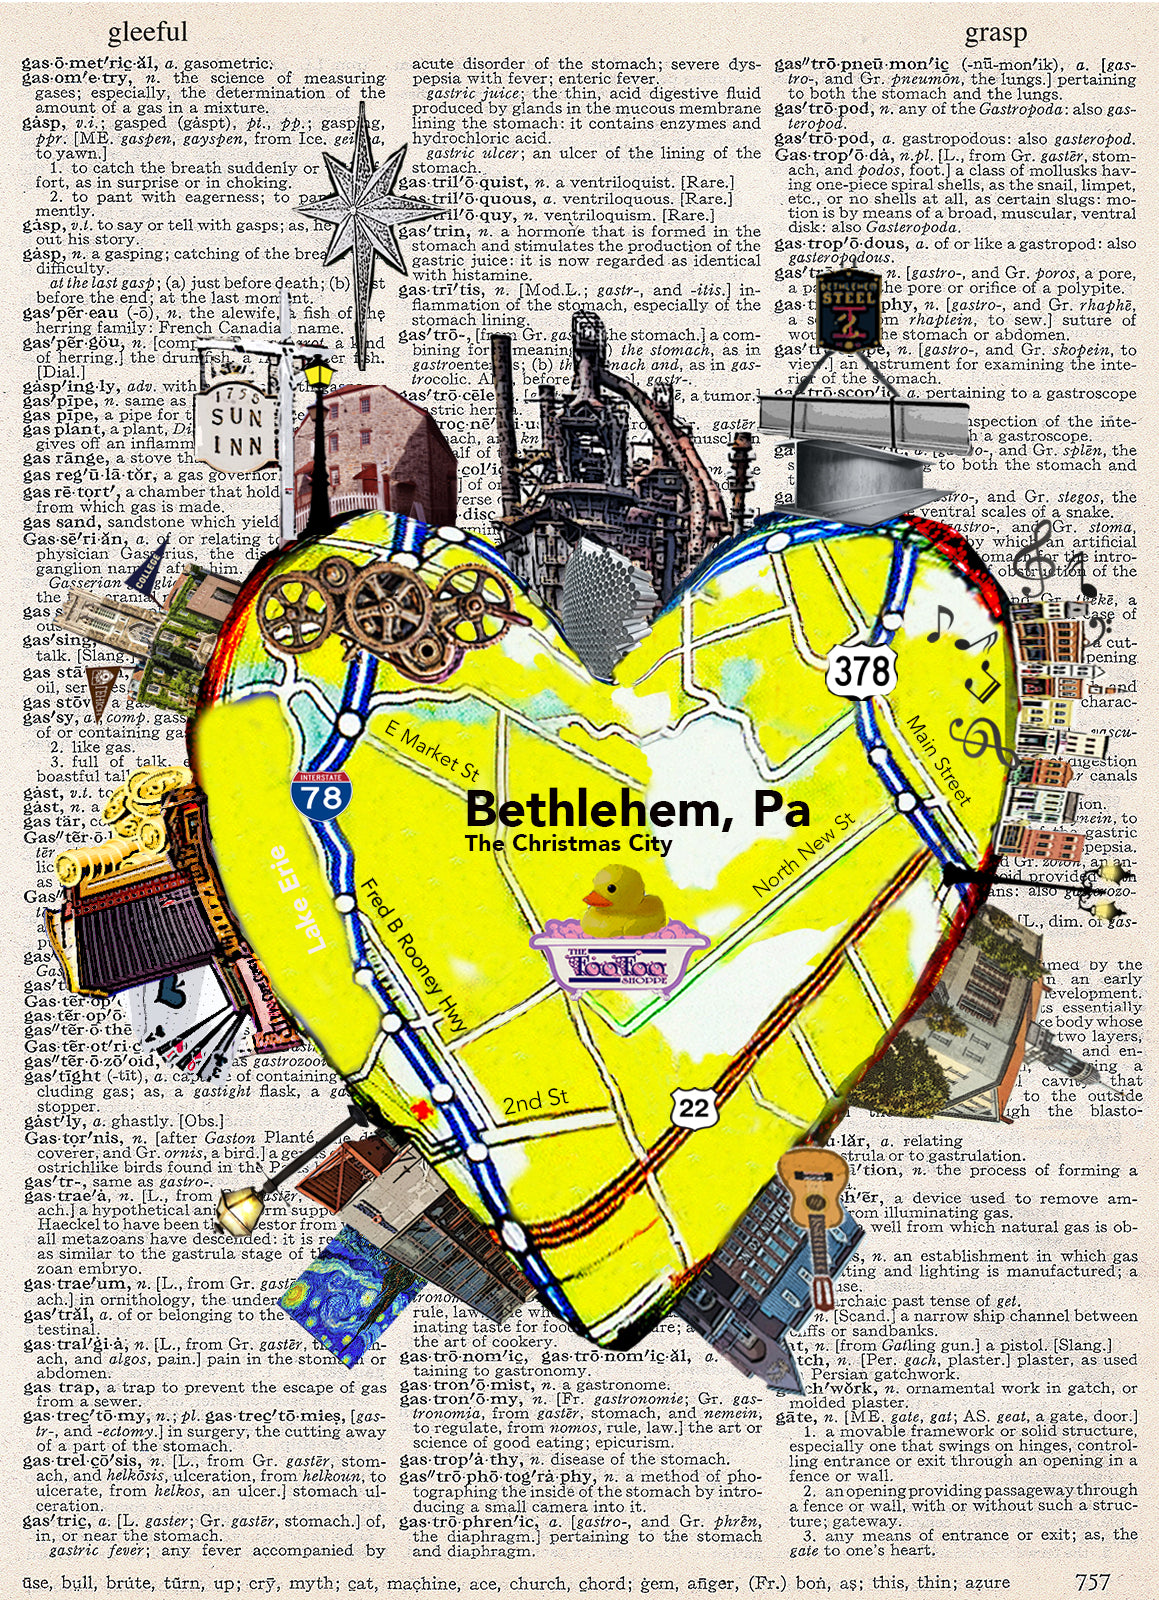 BETHLEHEM HEART PRINT